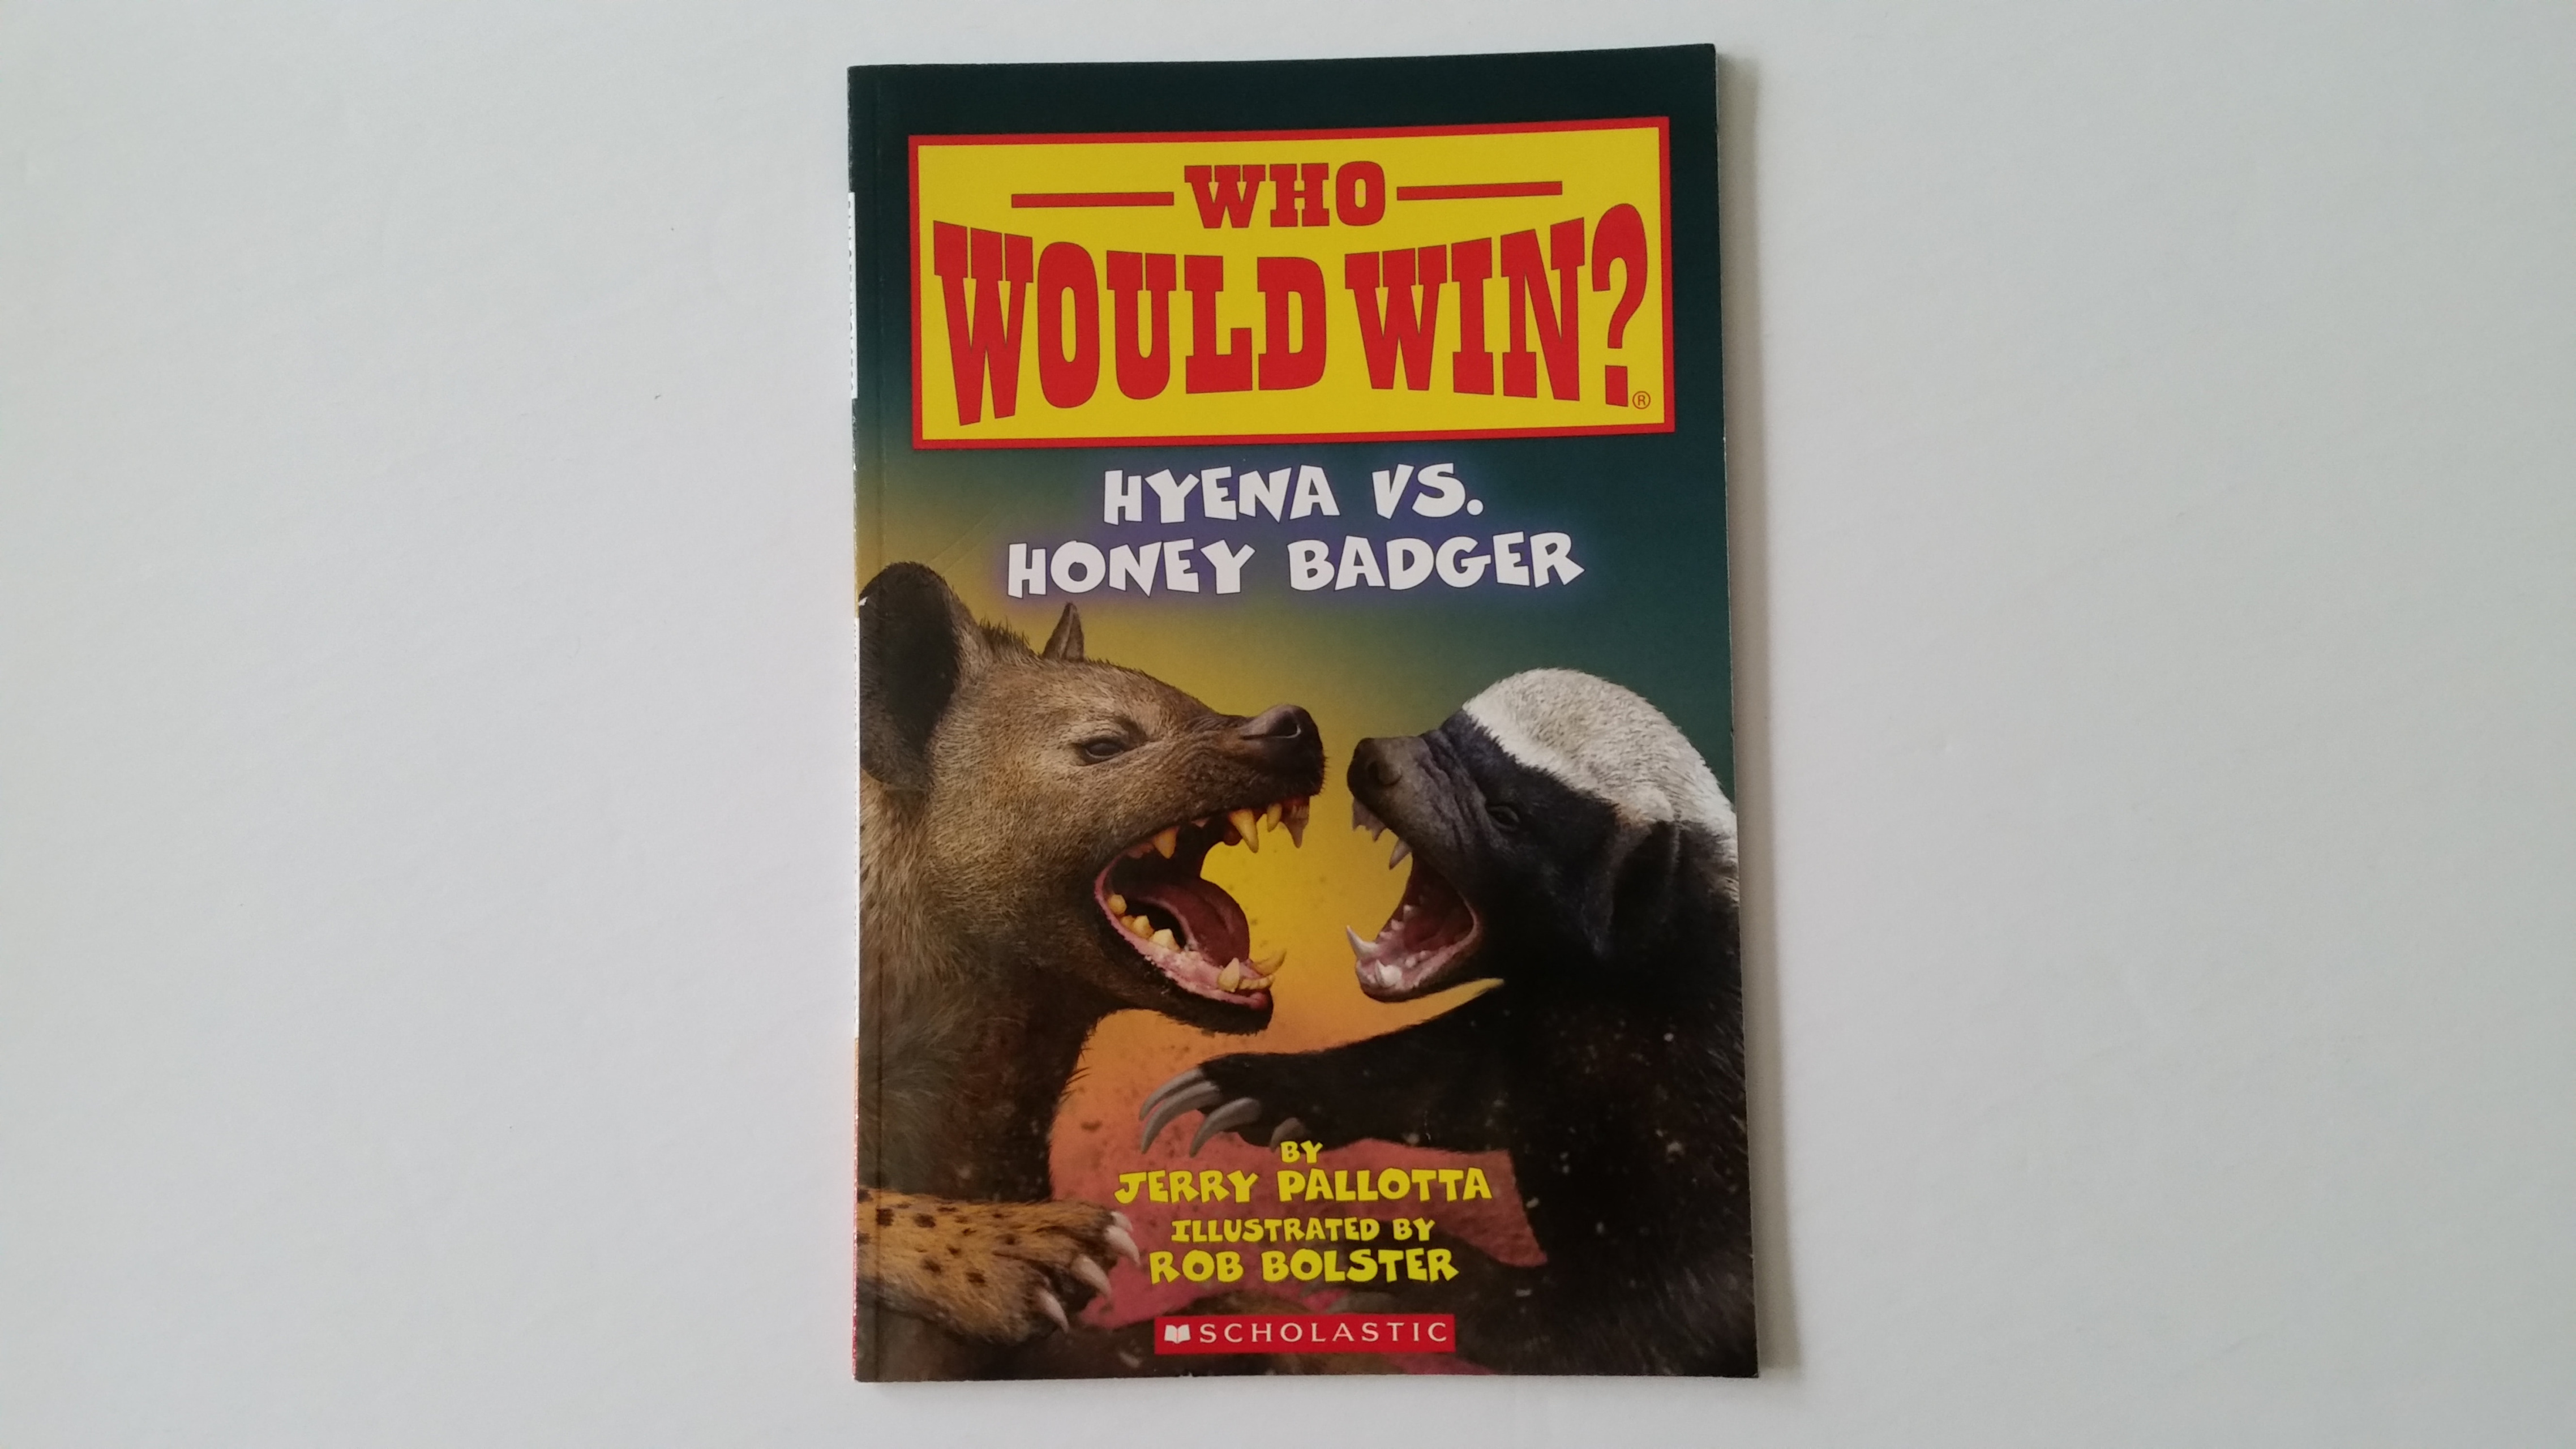 🦡 Honey Badger vs 🦌 Moose: See Who Wins